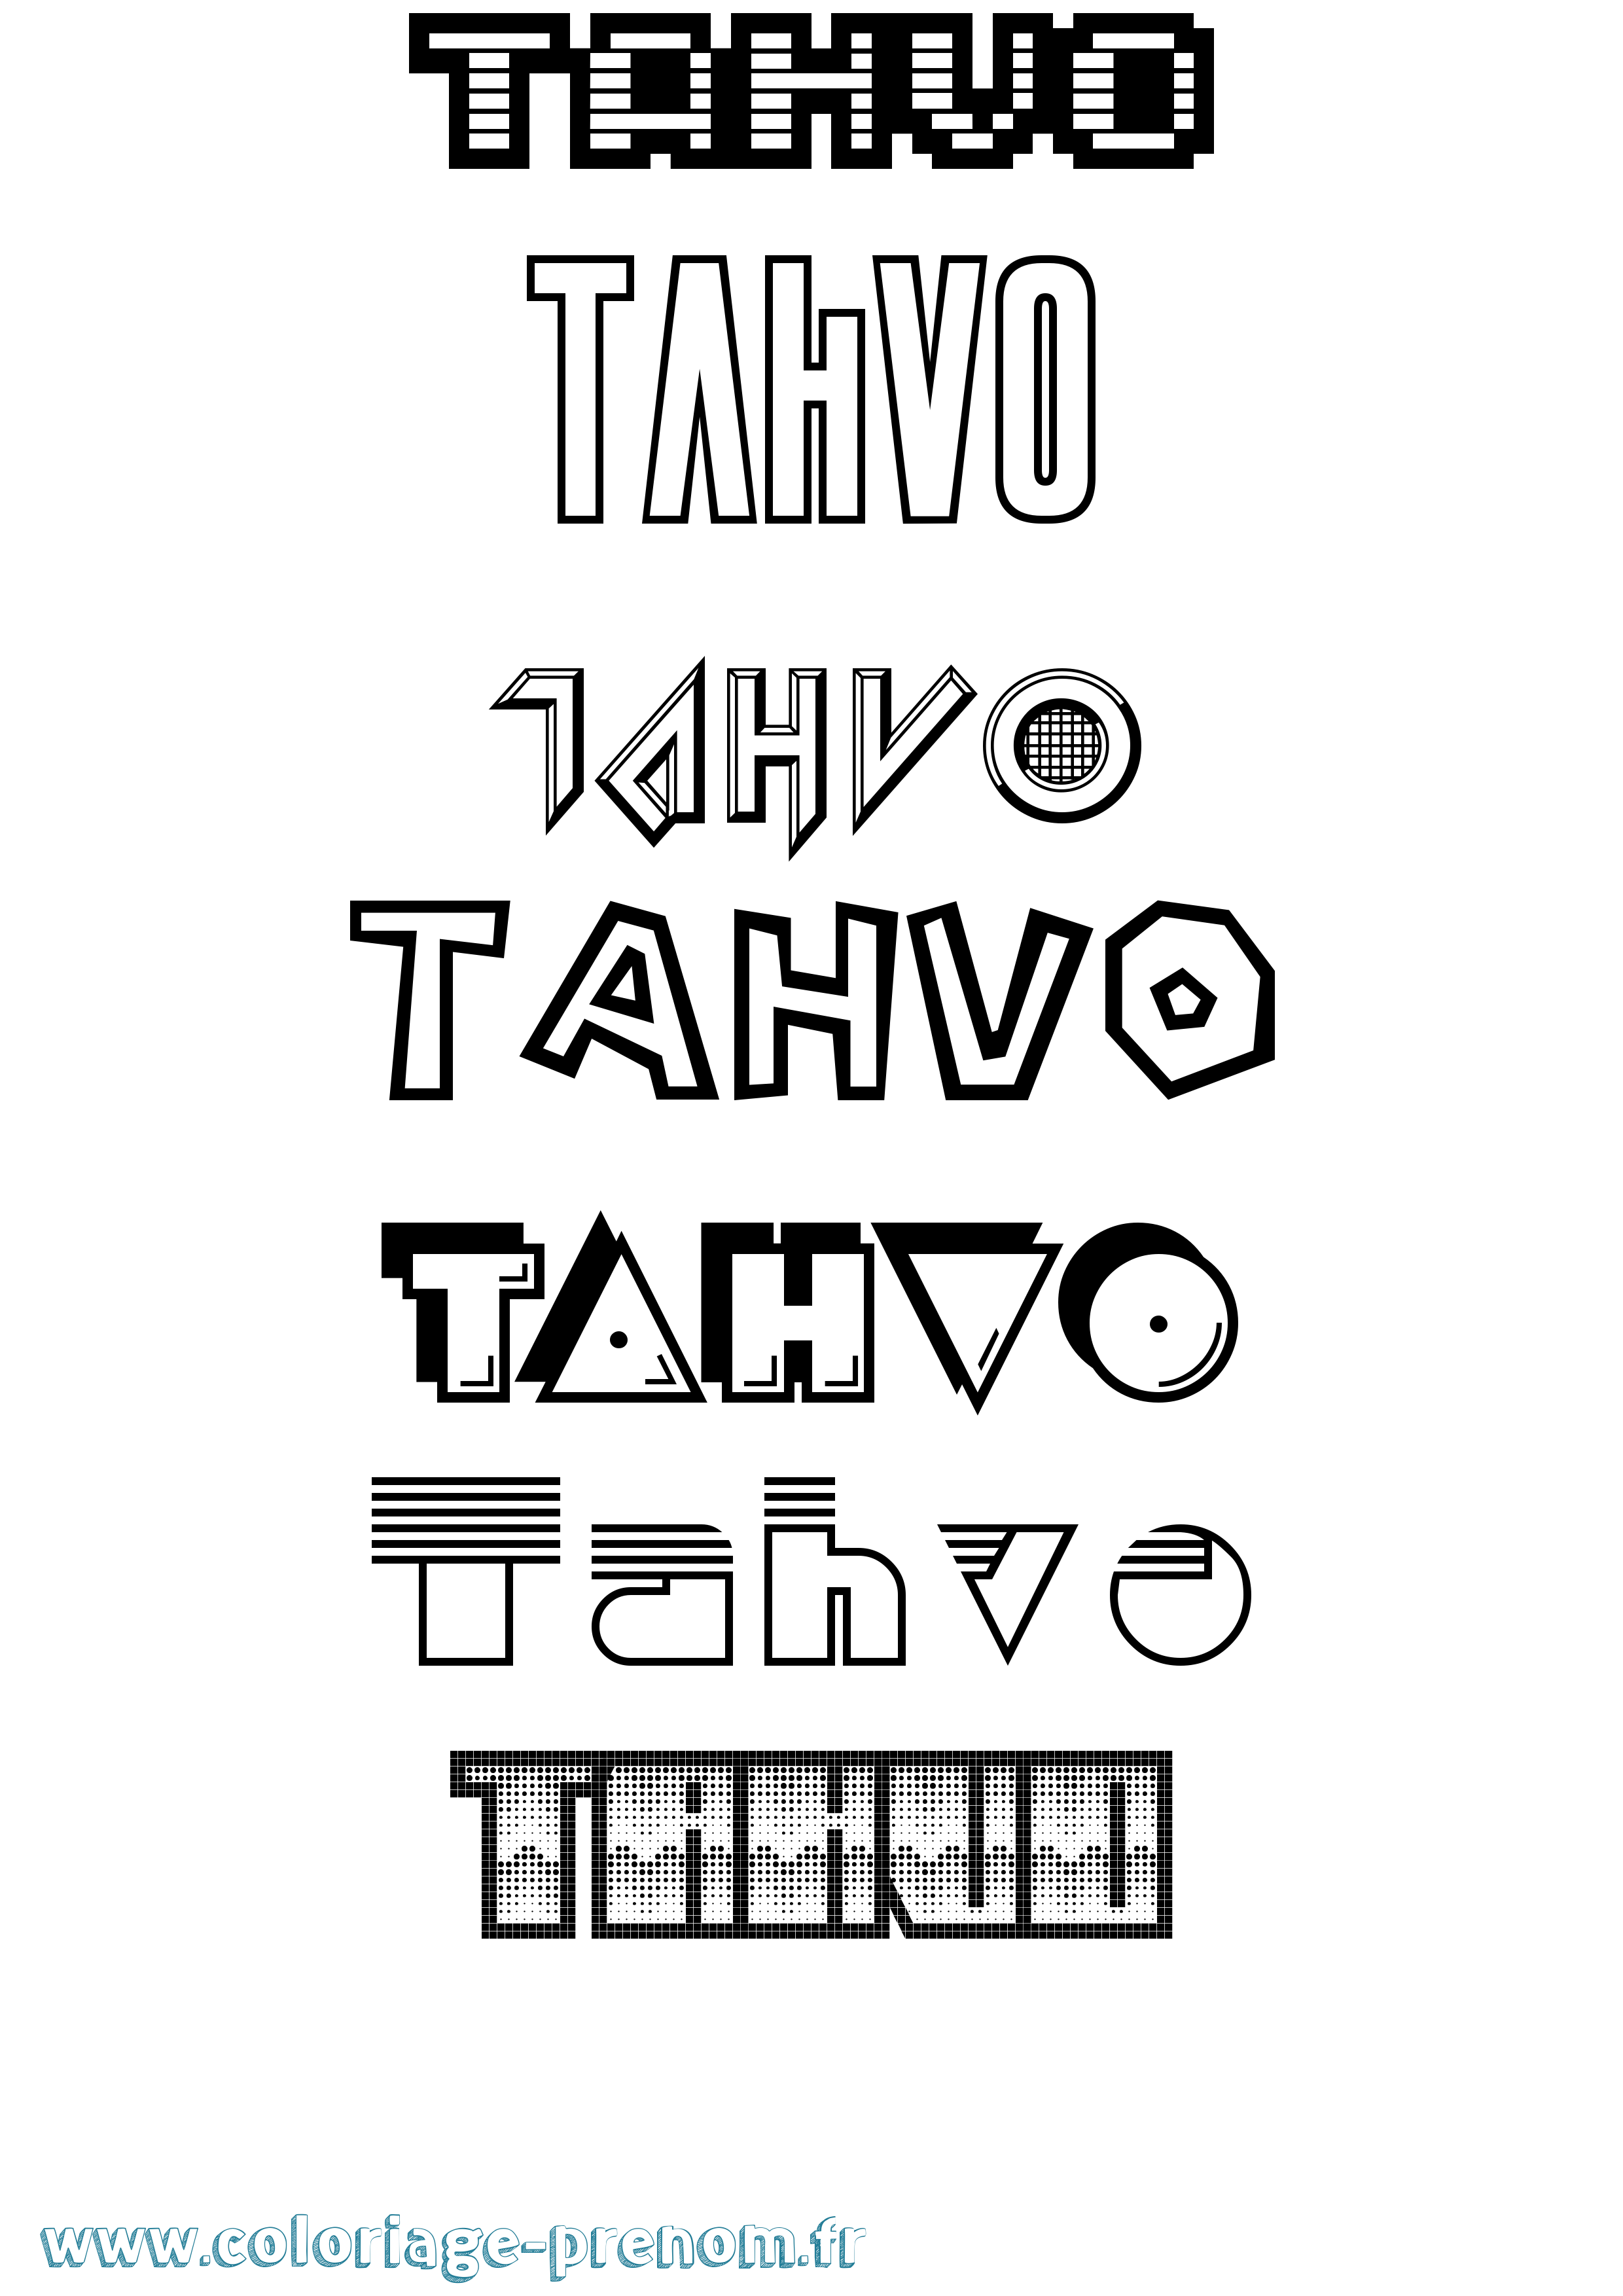 Coloriage prénom Tahvo Jeux Vidéos